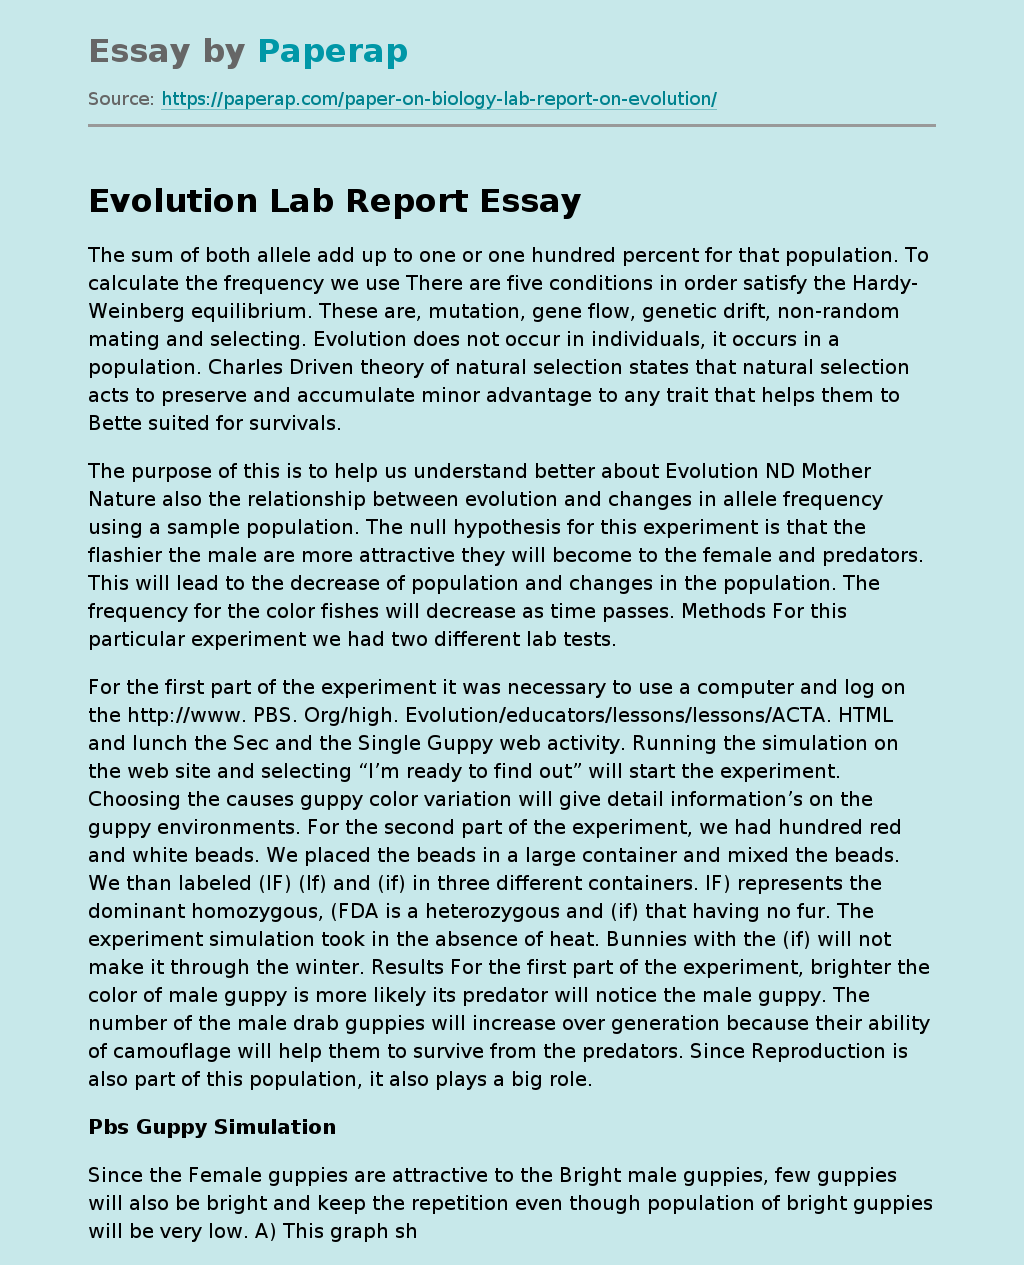 Evolution Lab Report Simulation